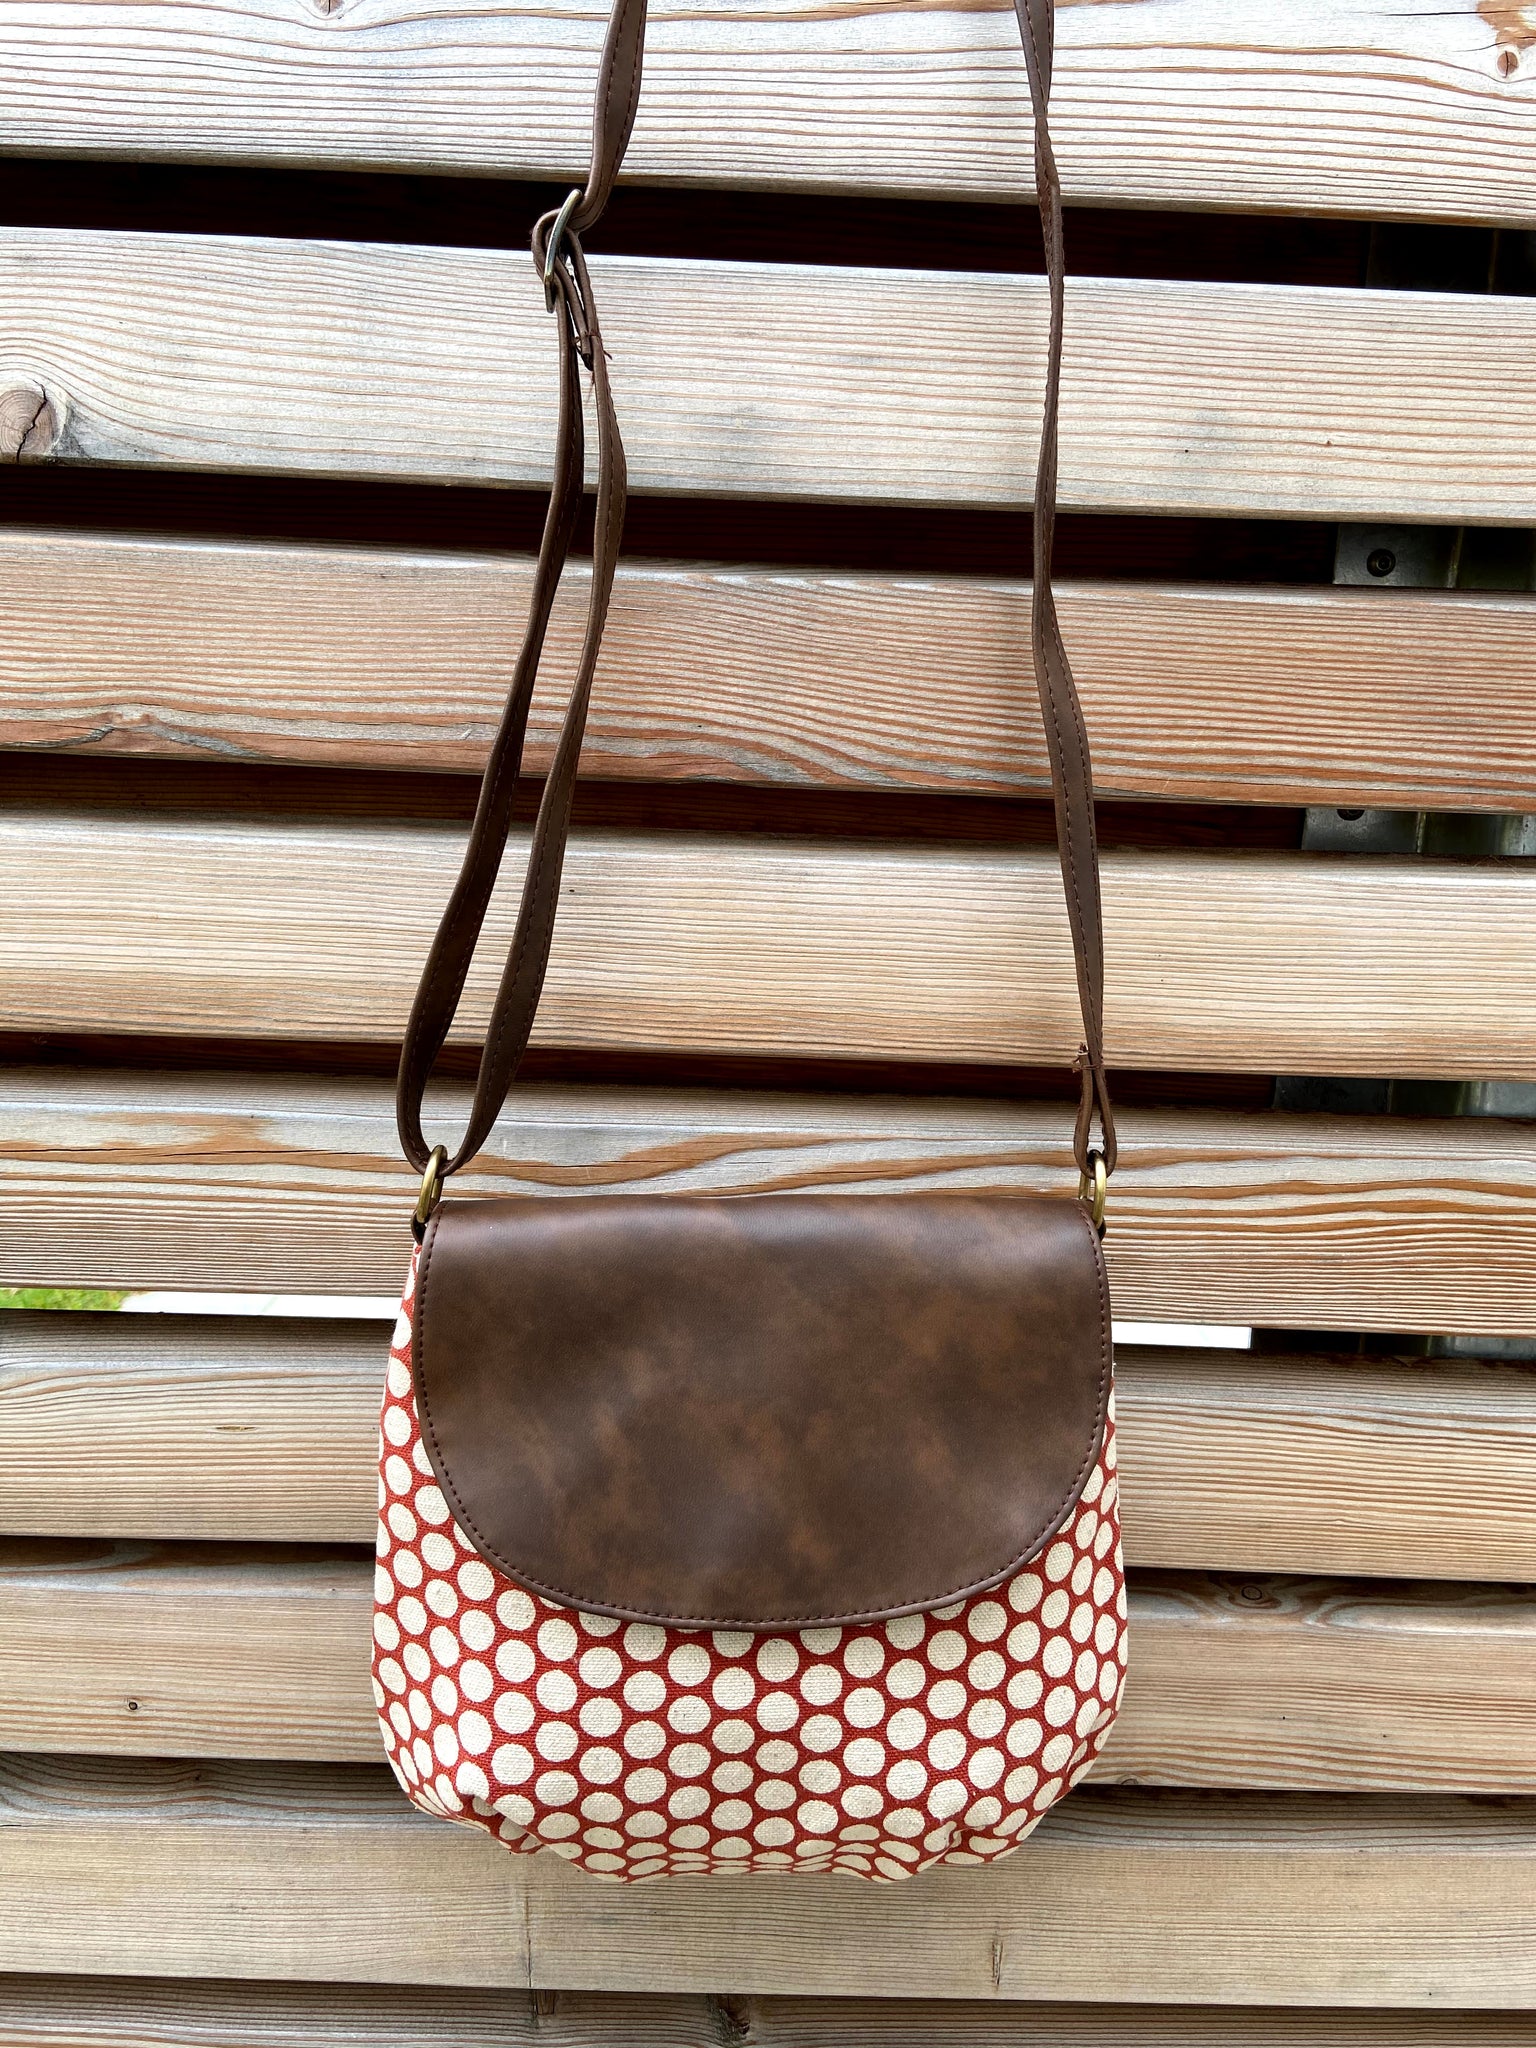 piccolino flap crossbody handbag in polka dots pattern